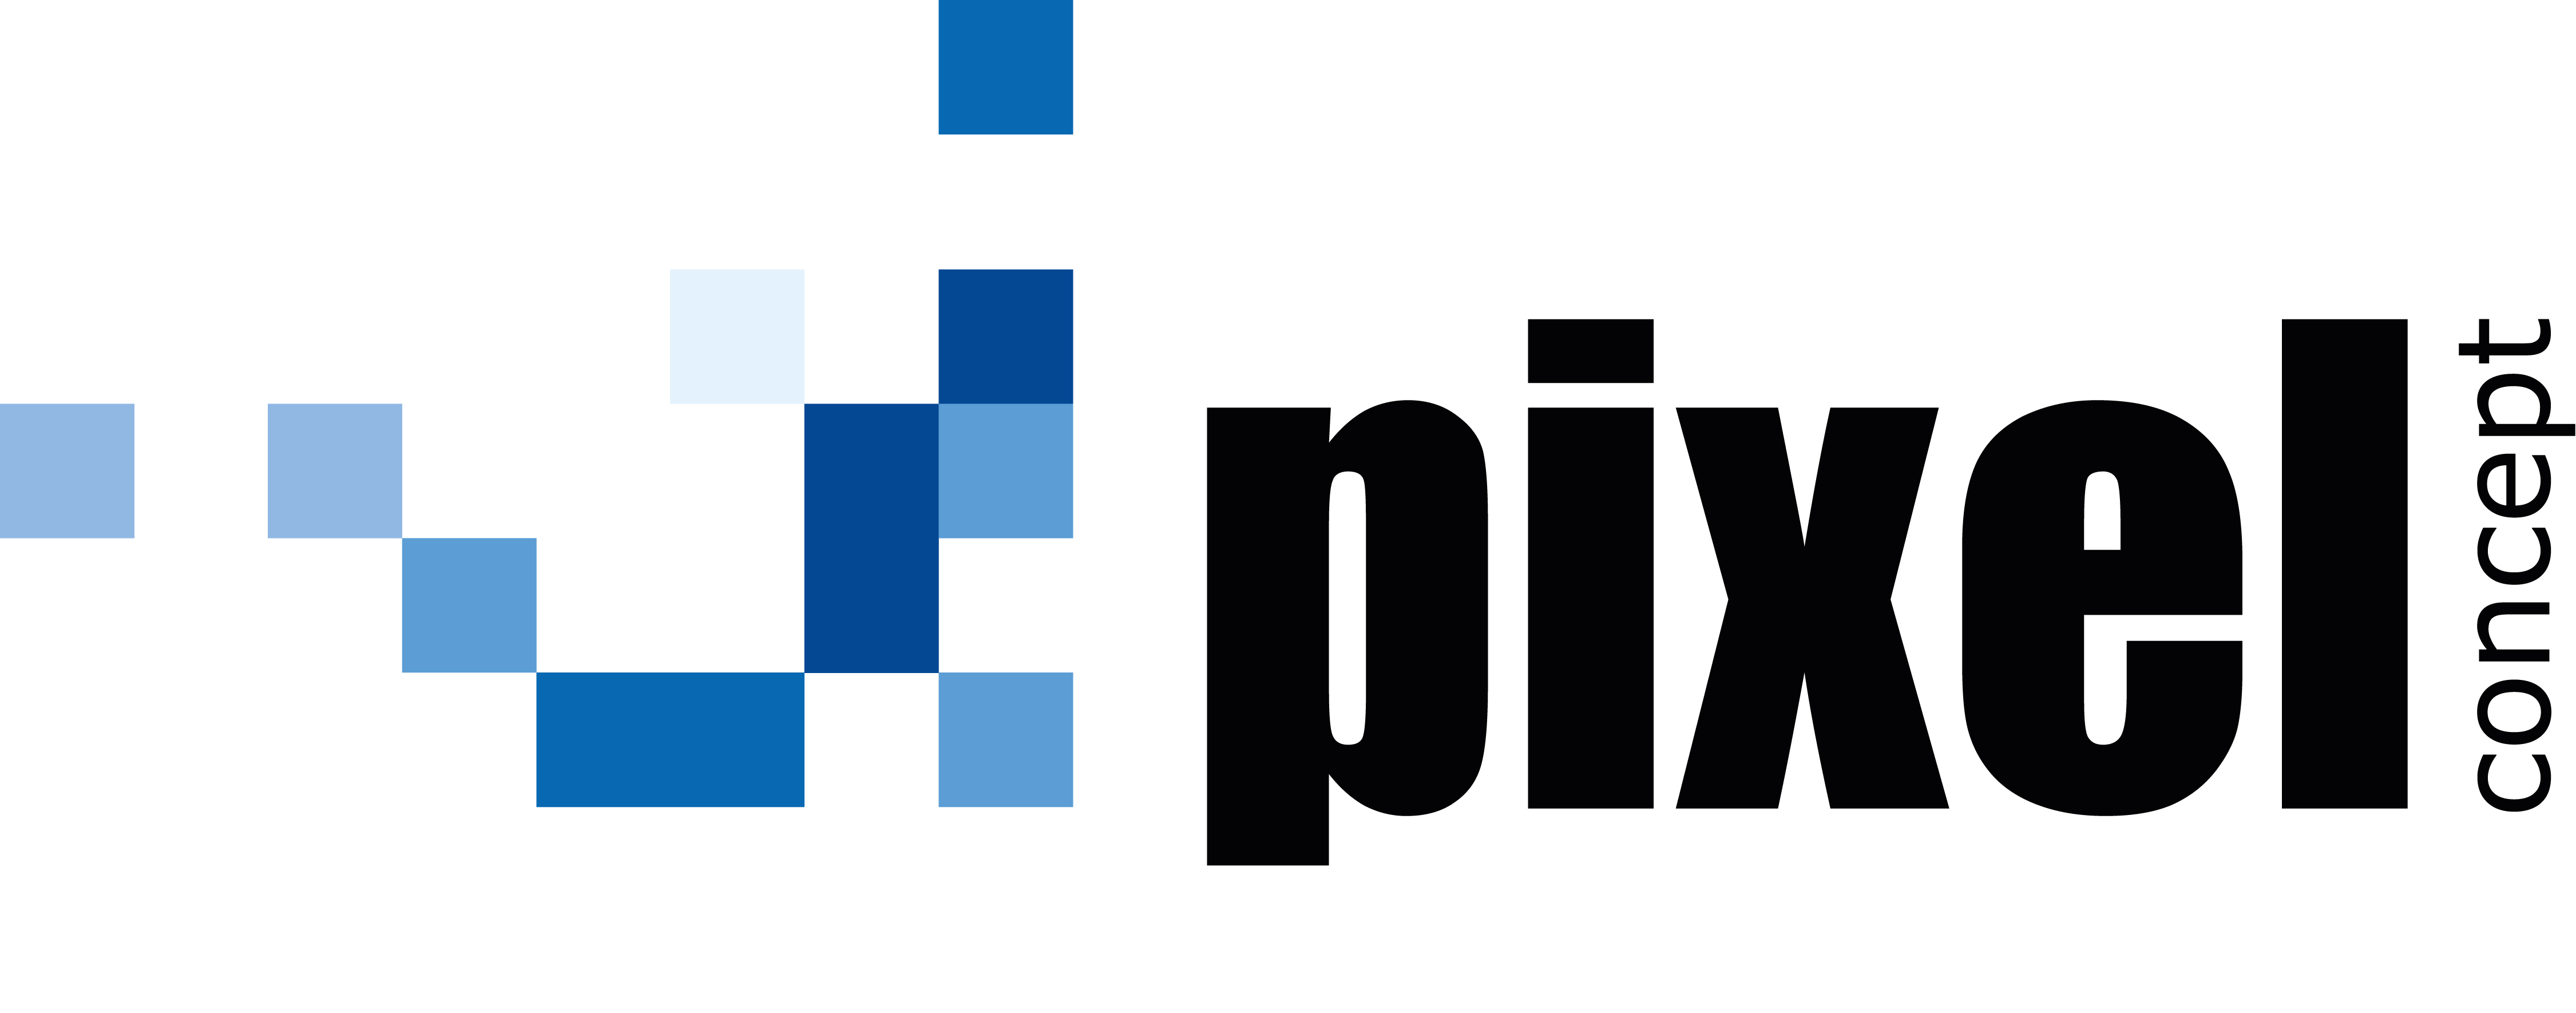 pixelconcept GmbH (Automanager)

